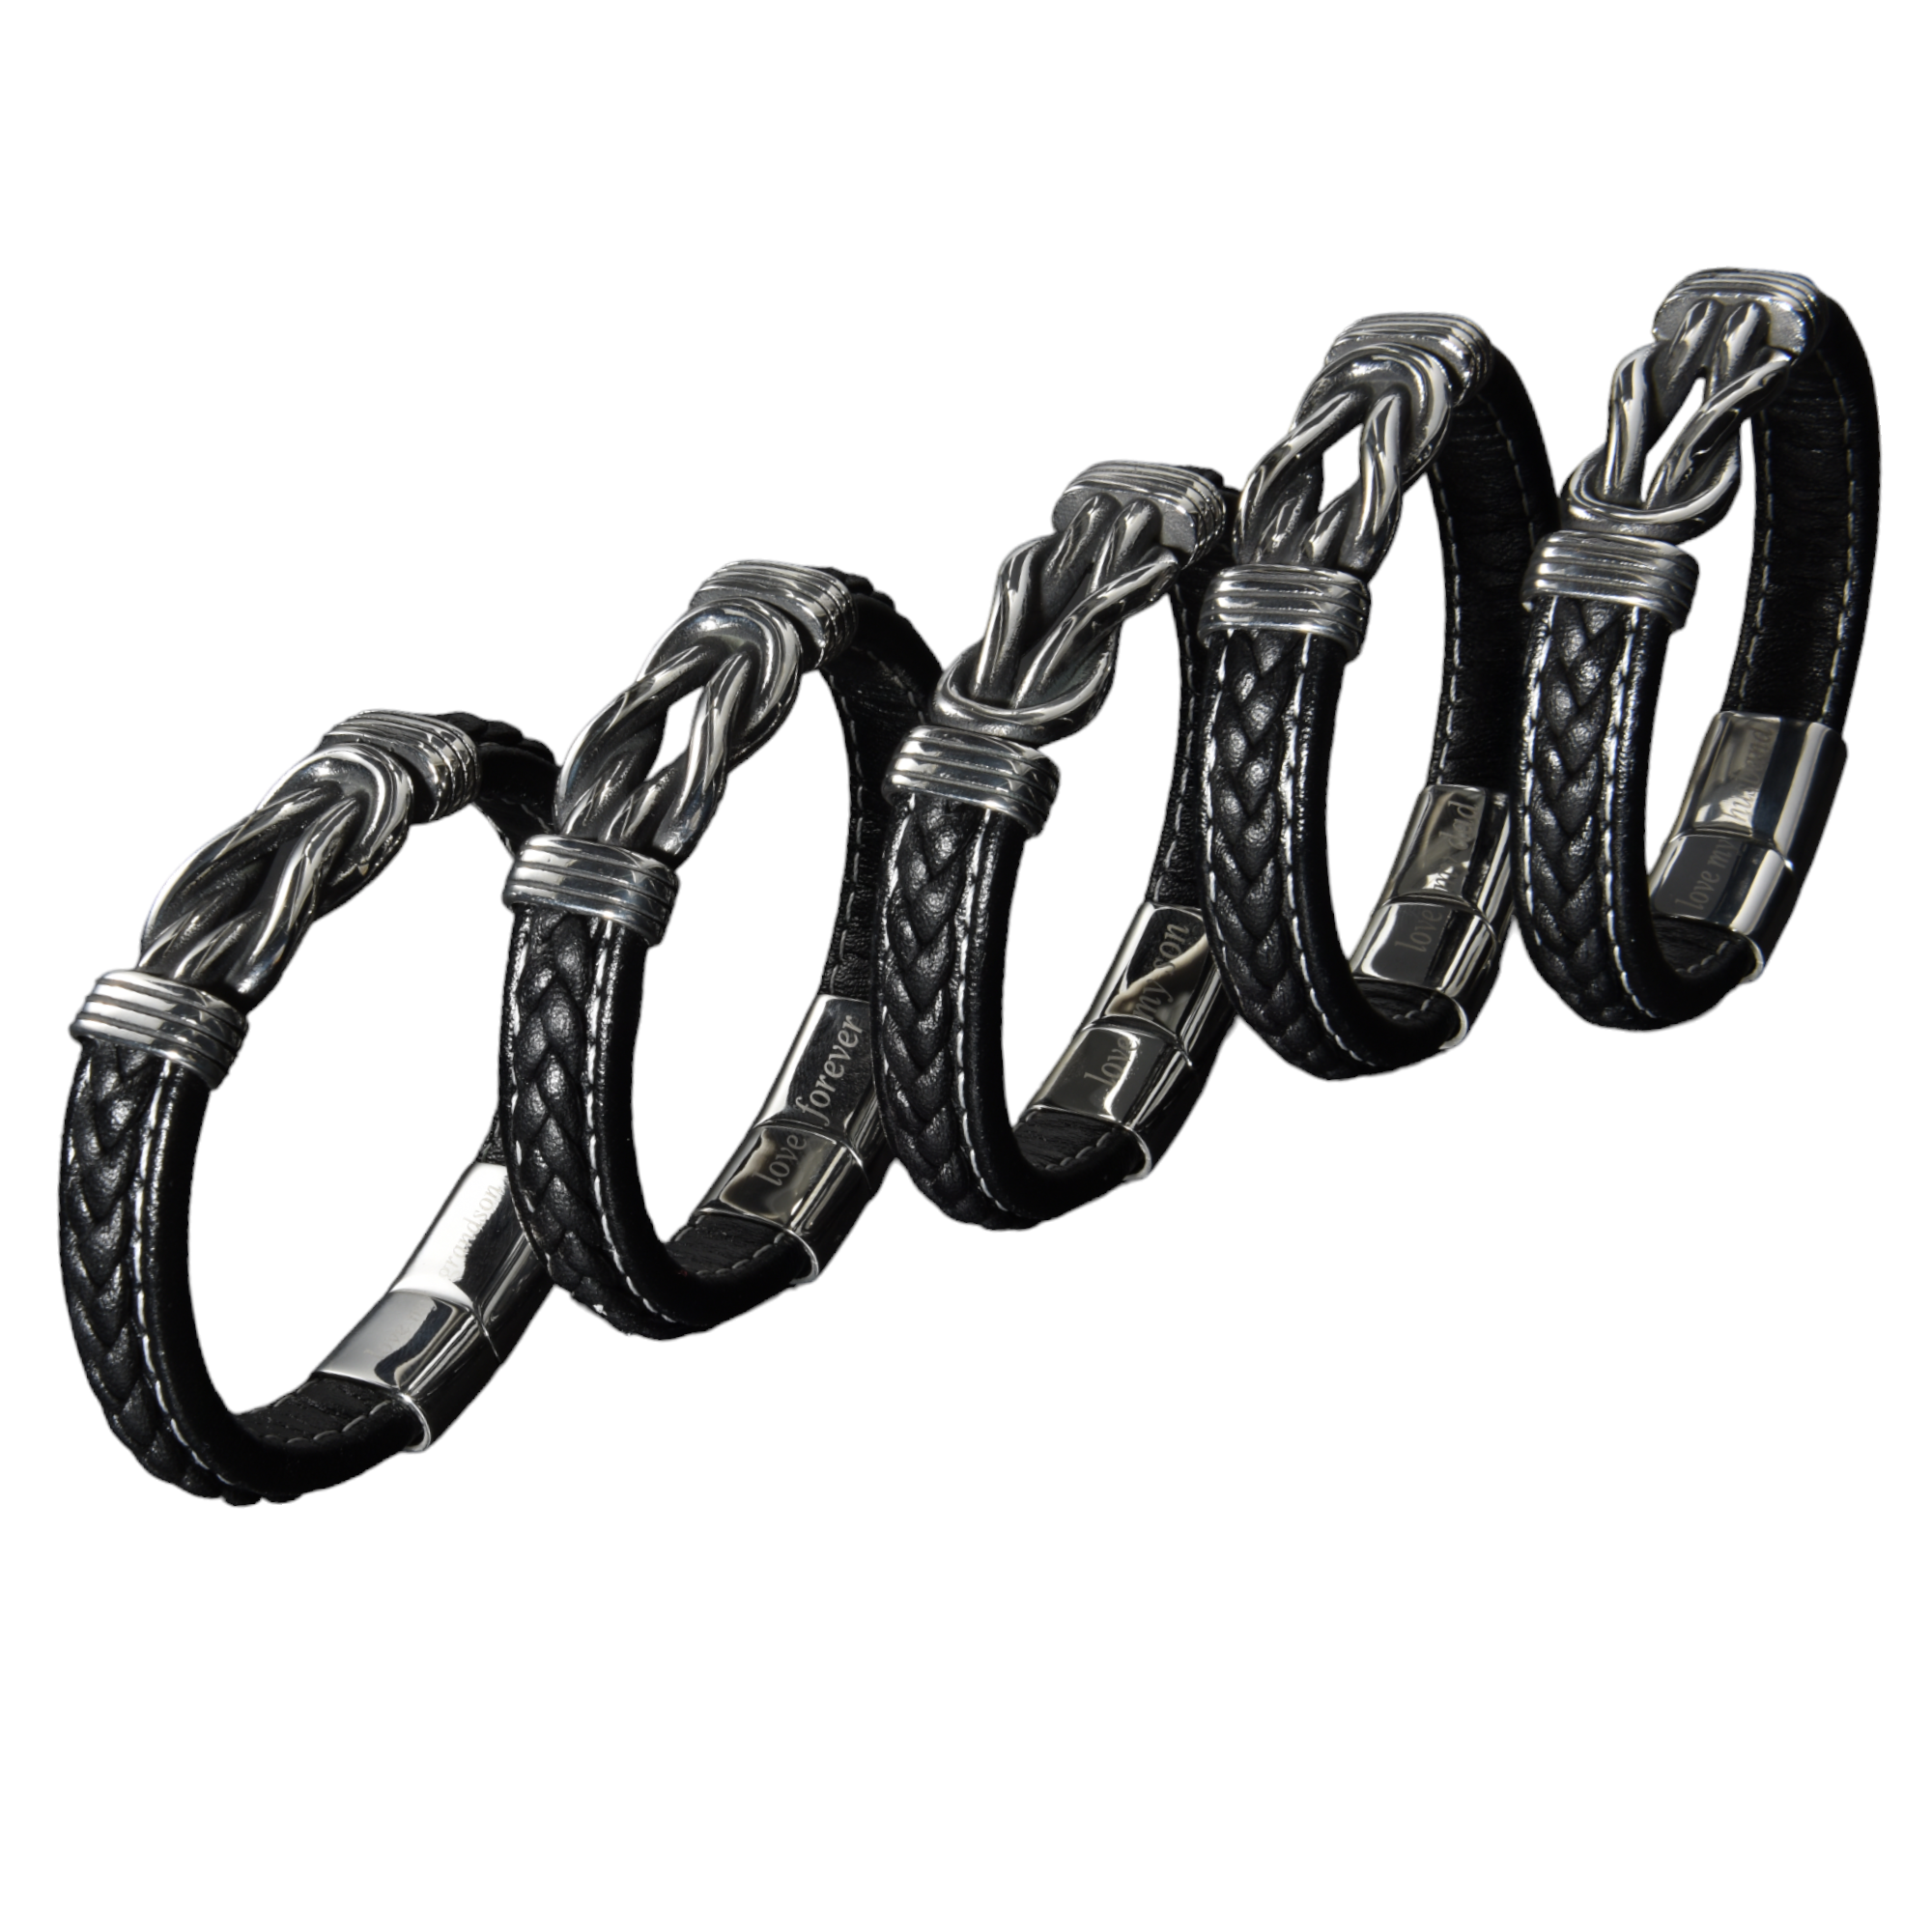 10pcs-Stylish Men’s Black Leather Stainless Steel Infinity Knot Bracelet With Engraved Messages (2pcs Each)|GCJ449|UK seller